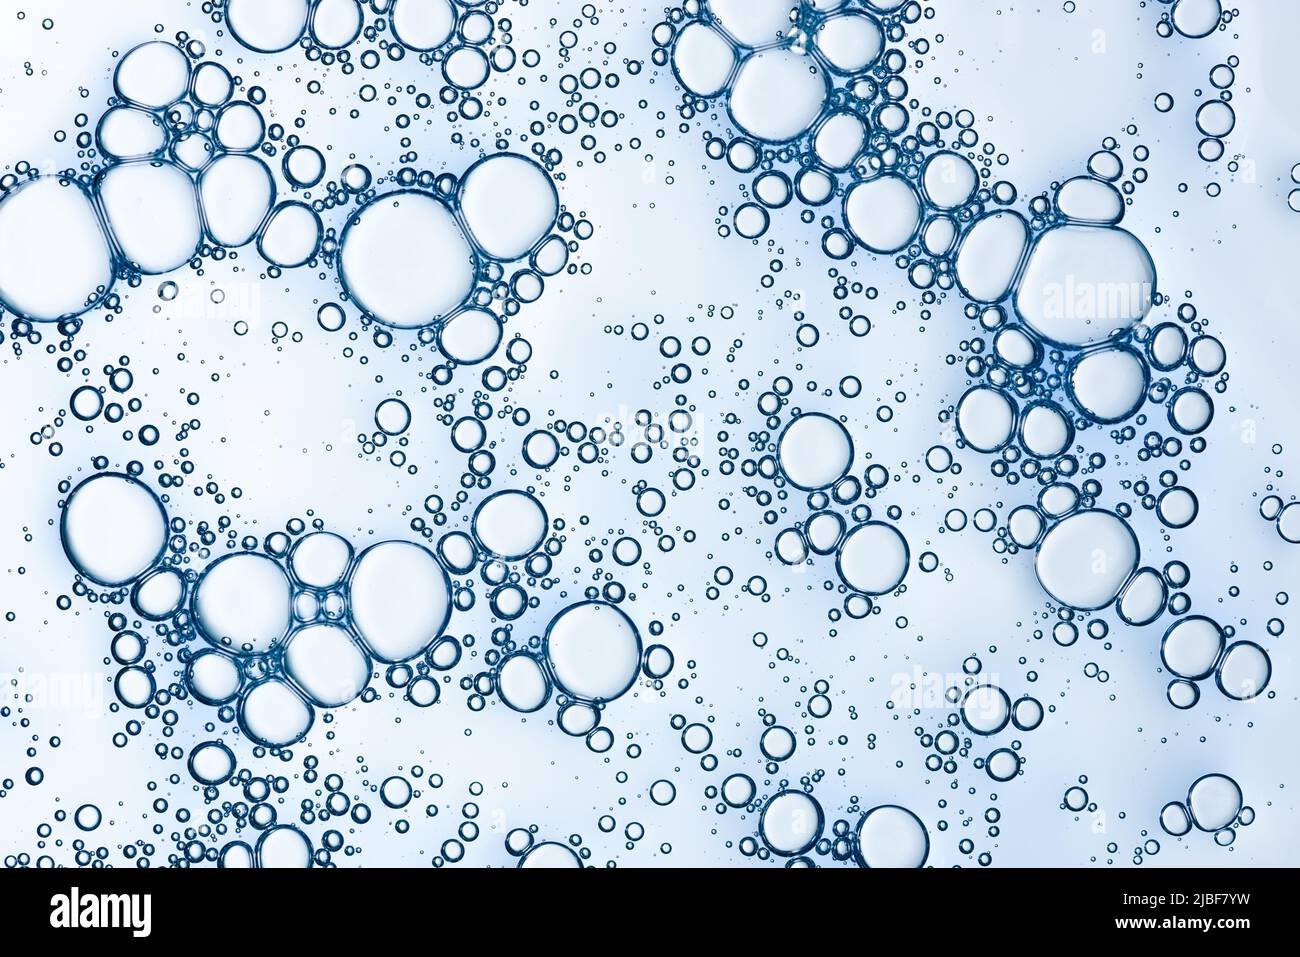 Oxygen bubbles in liquid skicare gel serum macro texture background top view Stock Photo